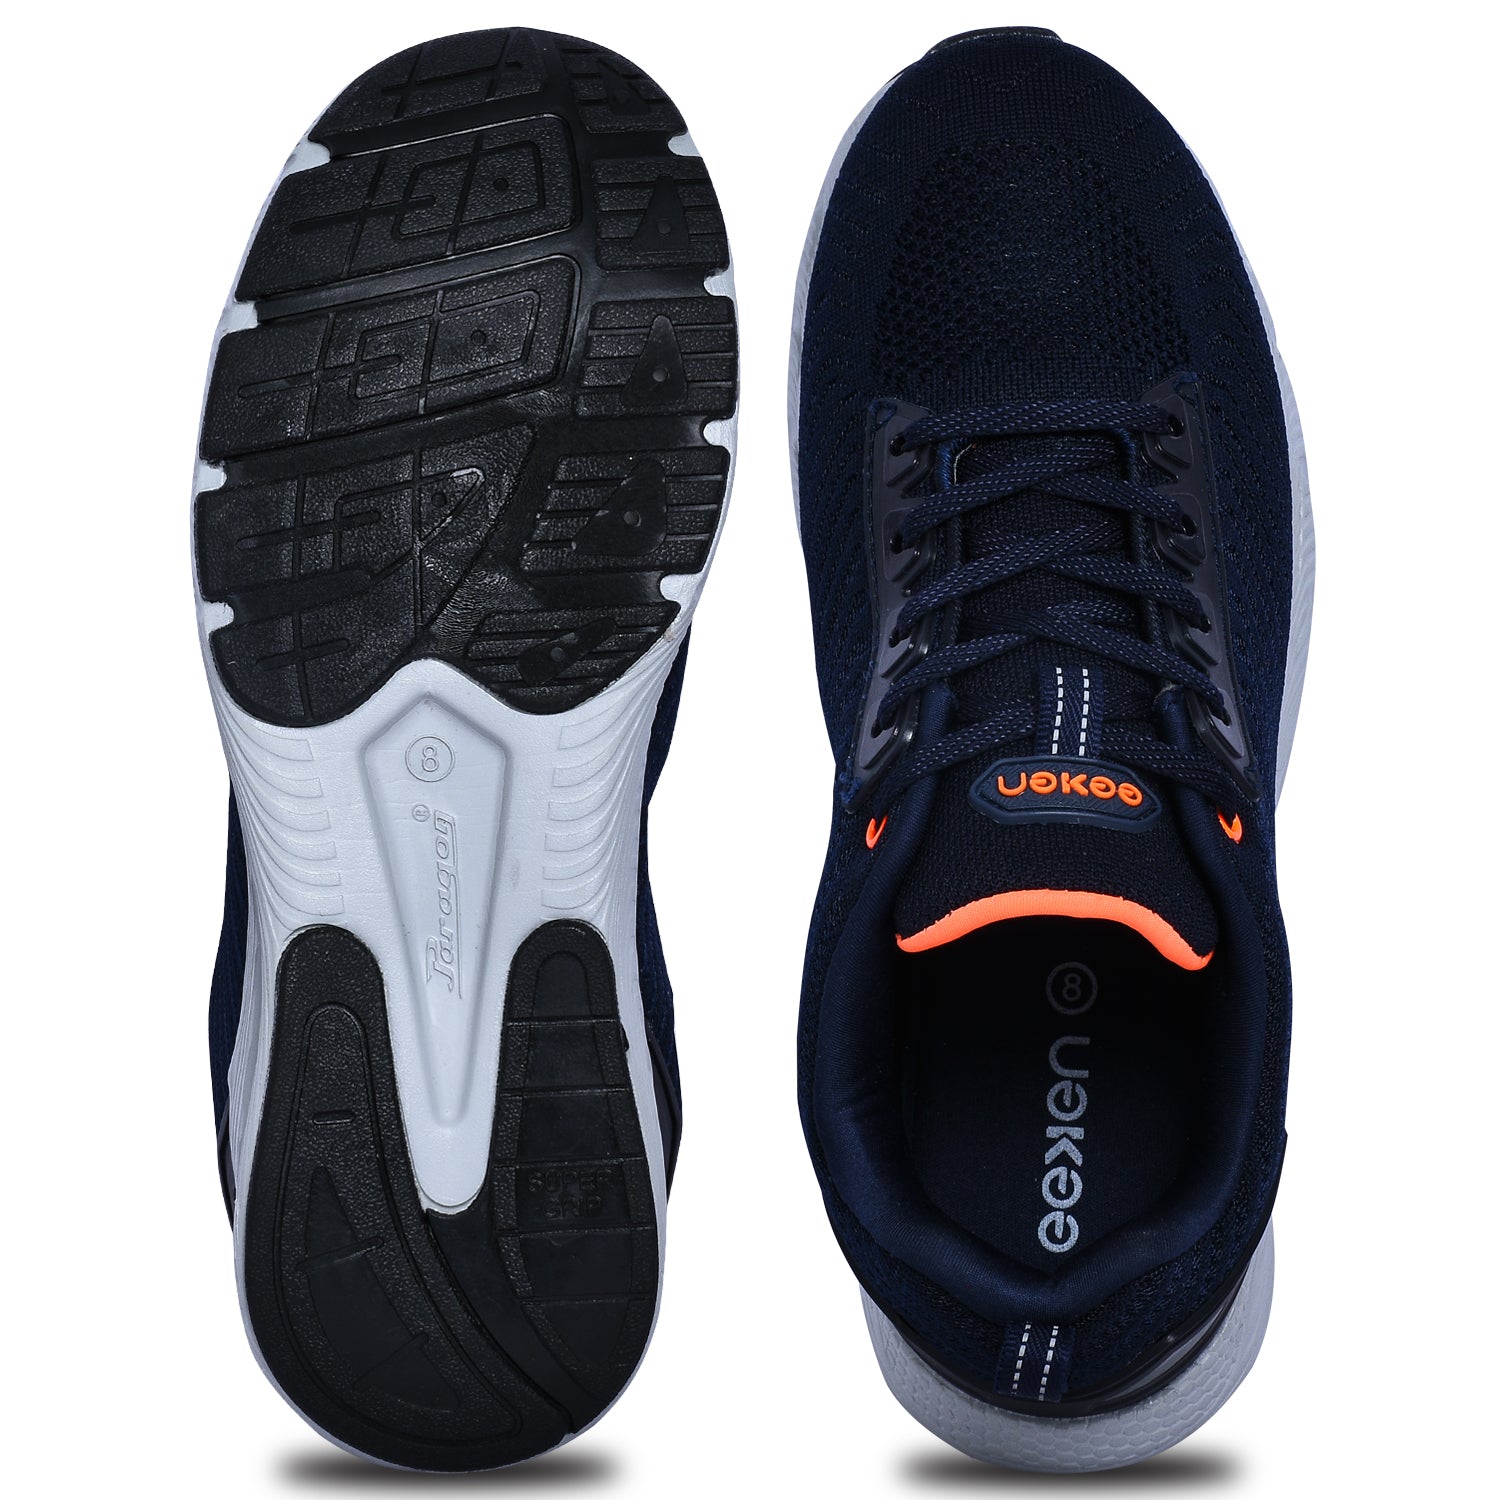 Eeken Navy Blue Athleisure Shoes for Men